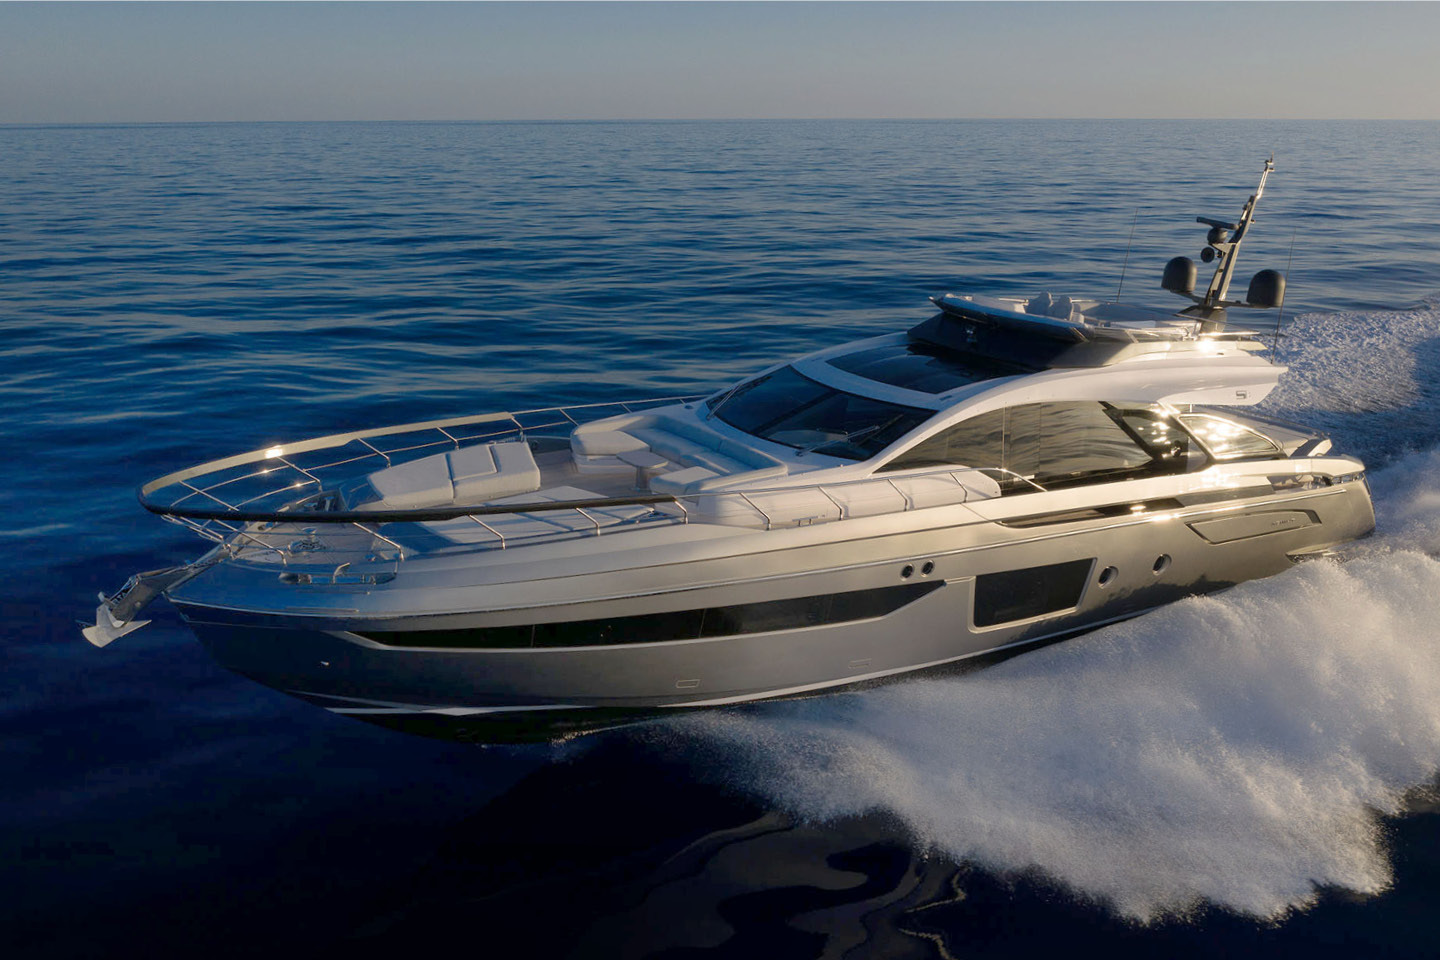 azimut yacht s8 price